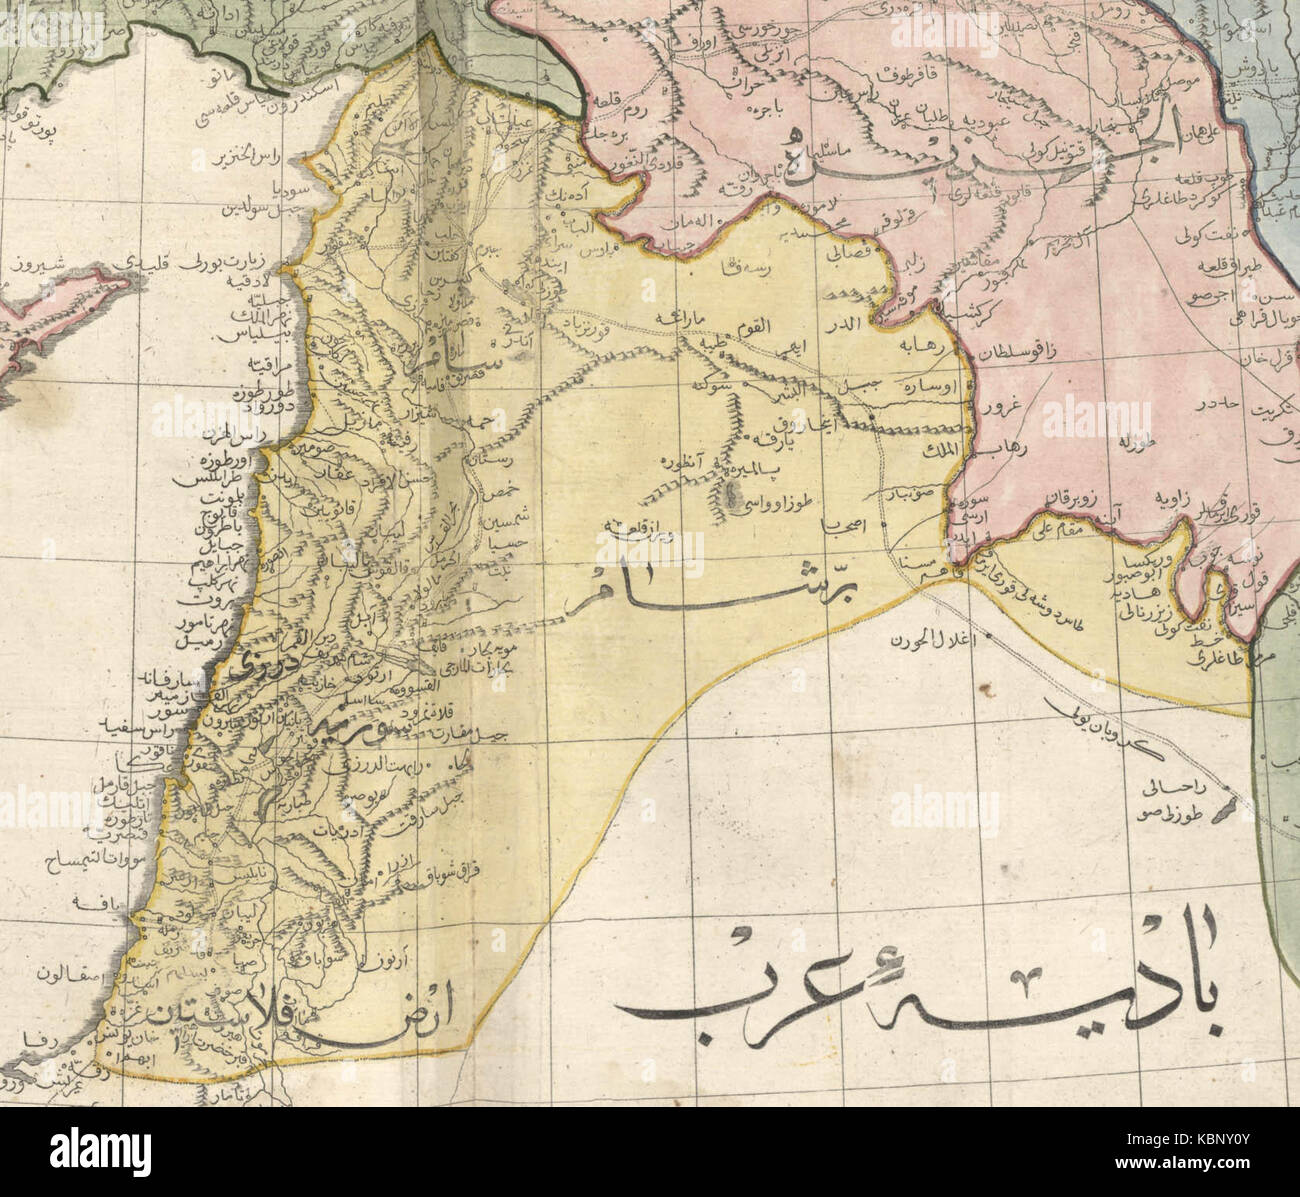 1803 Cedid Atlas, showing Ottoman Syria labelled as "Al Sham" in yellow  Stock Photo - Alamy